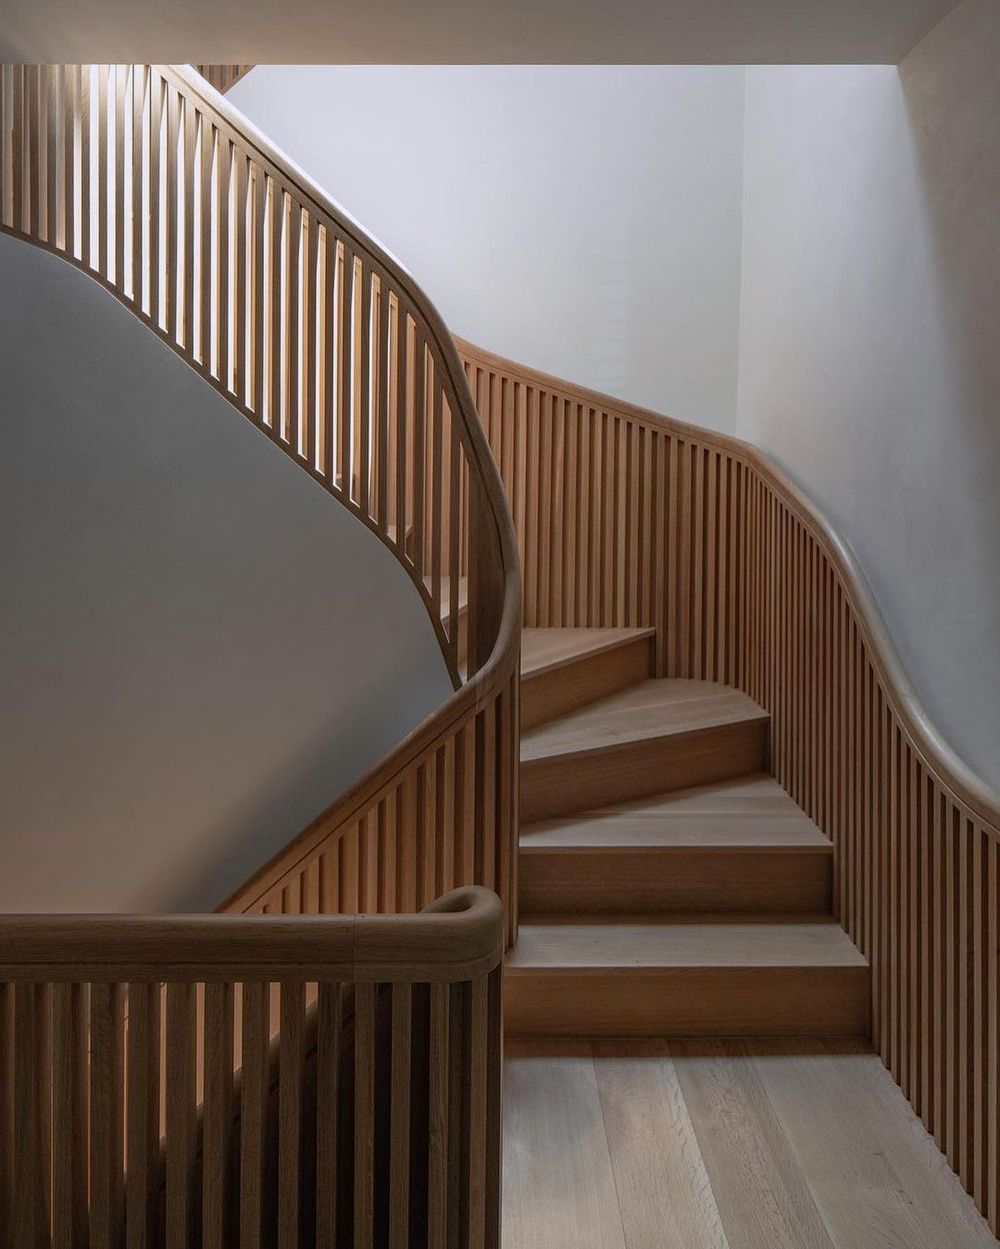 12 Wood Slat Panel Interior Design Ideas for Walls & Ceilings